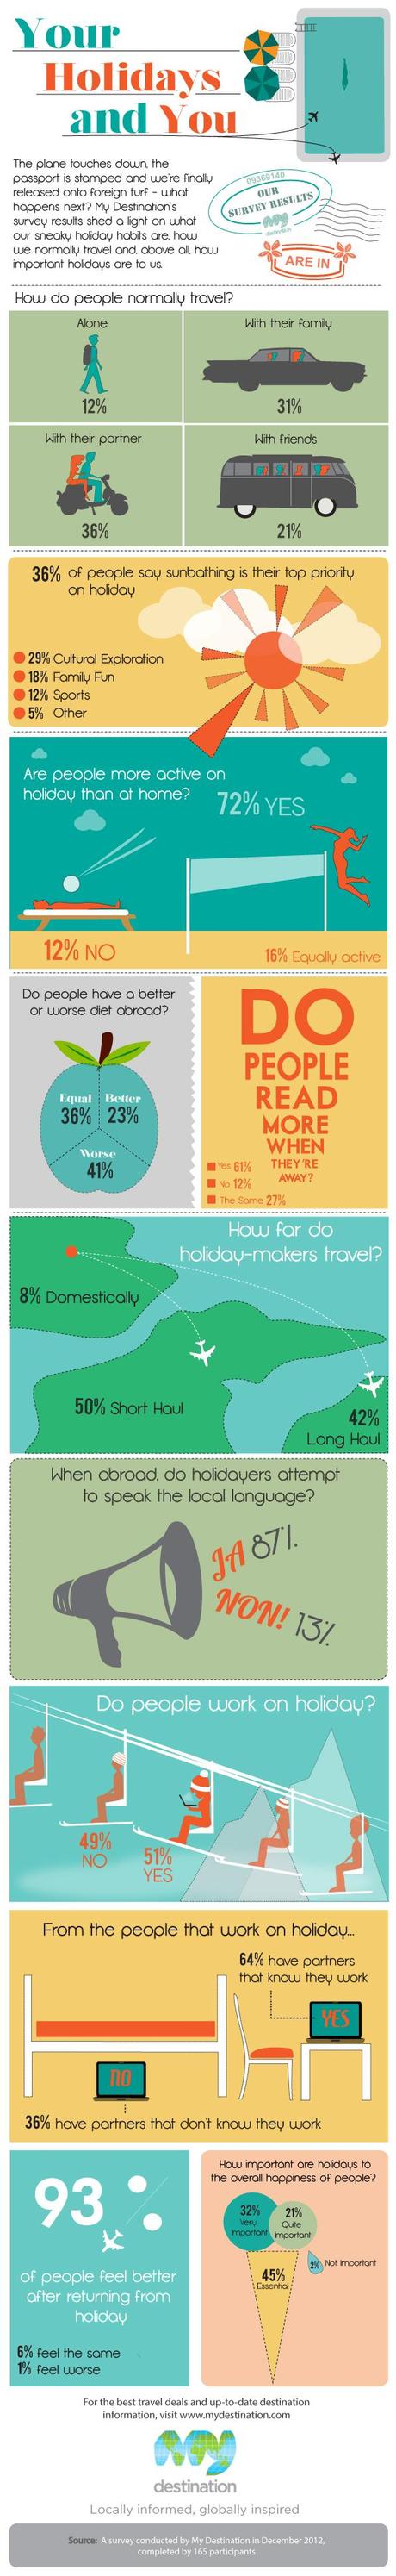 Holiday Travel Habits Infographic